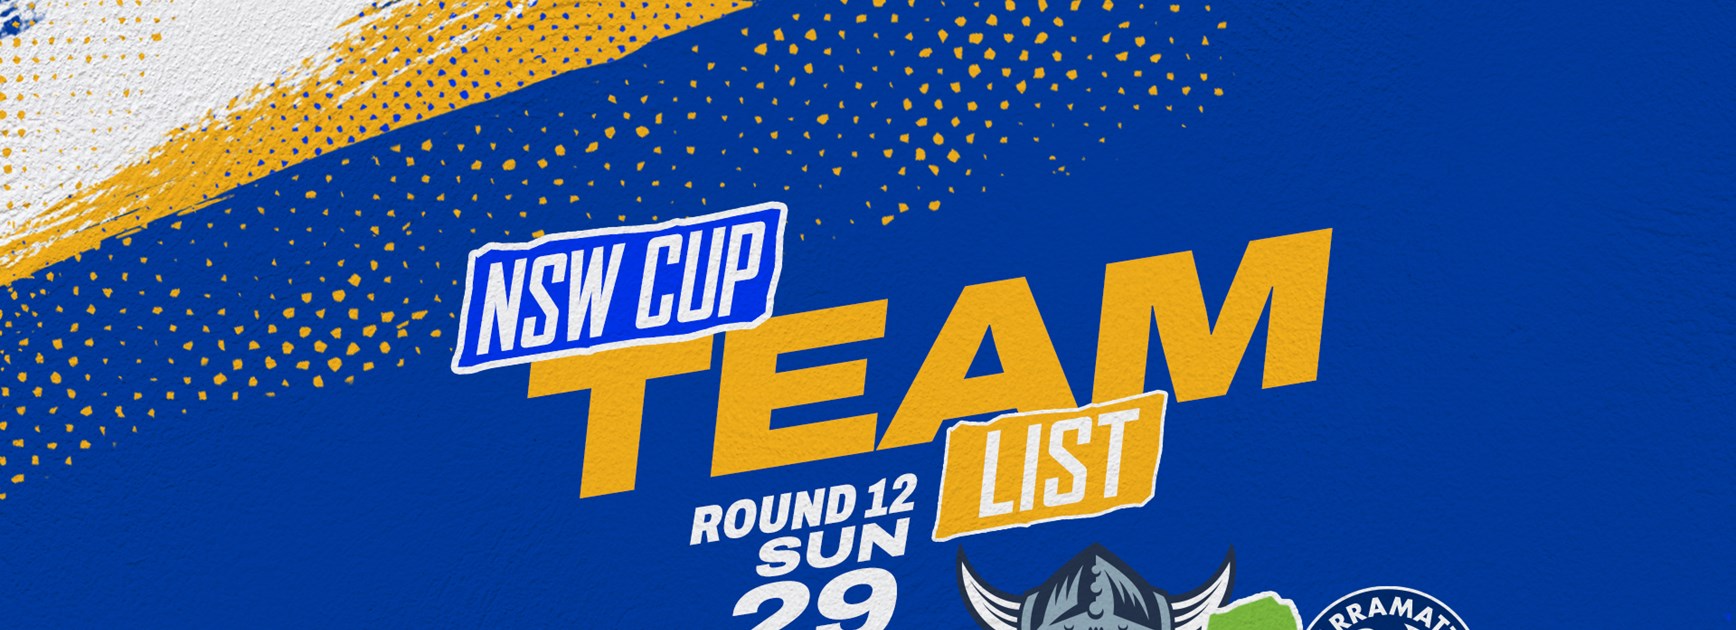 NSW Cup Team List - Raiders v Eels, Round 12